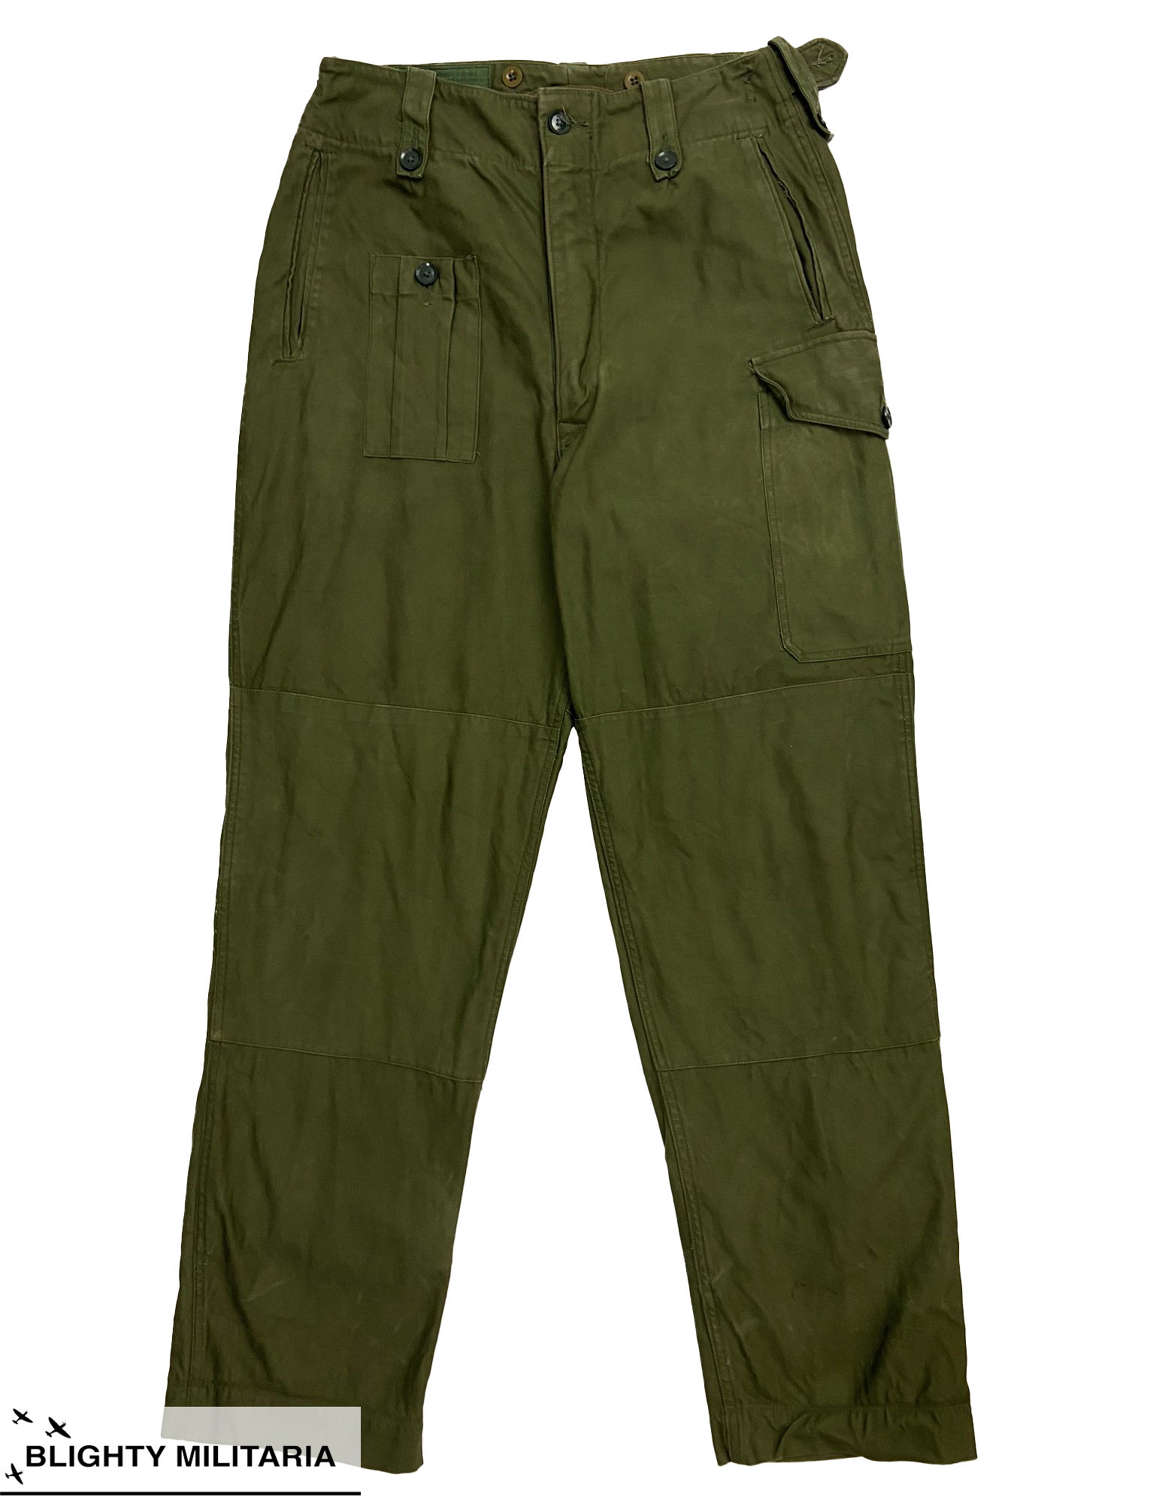 Original British Army 1960 Pattern Combat Trousers - Size 5